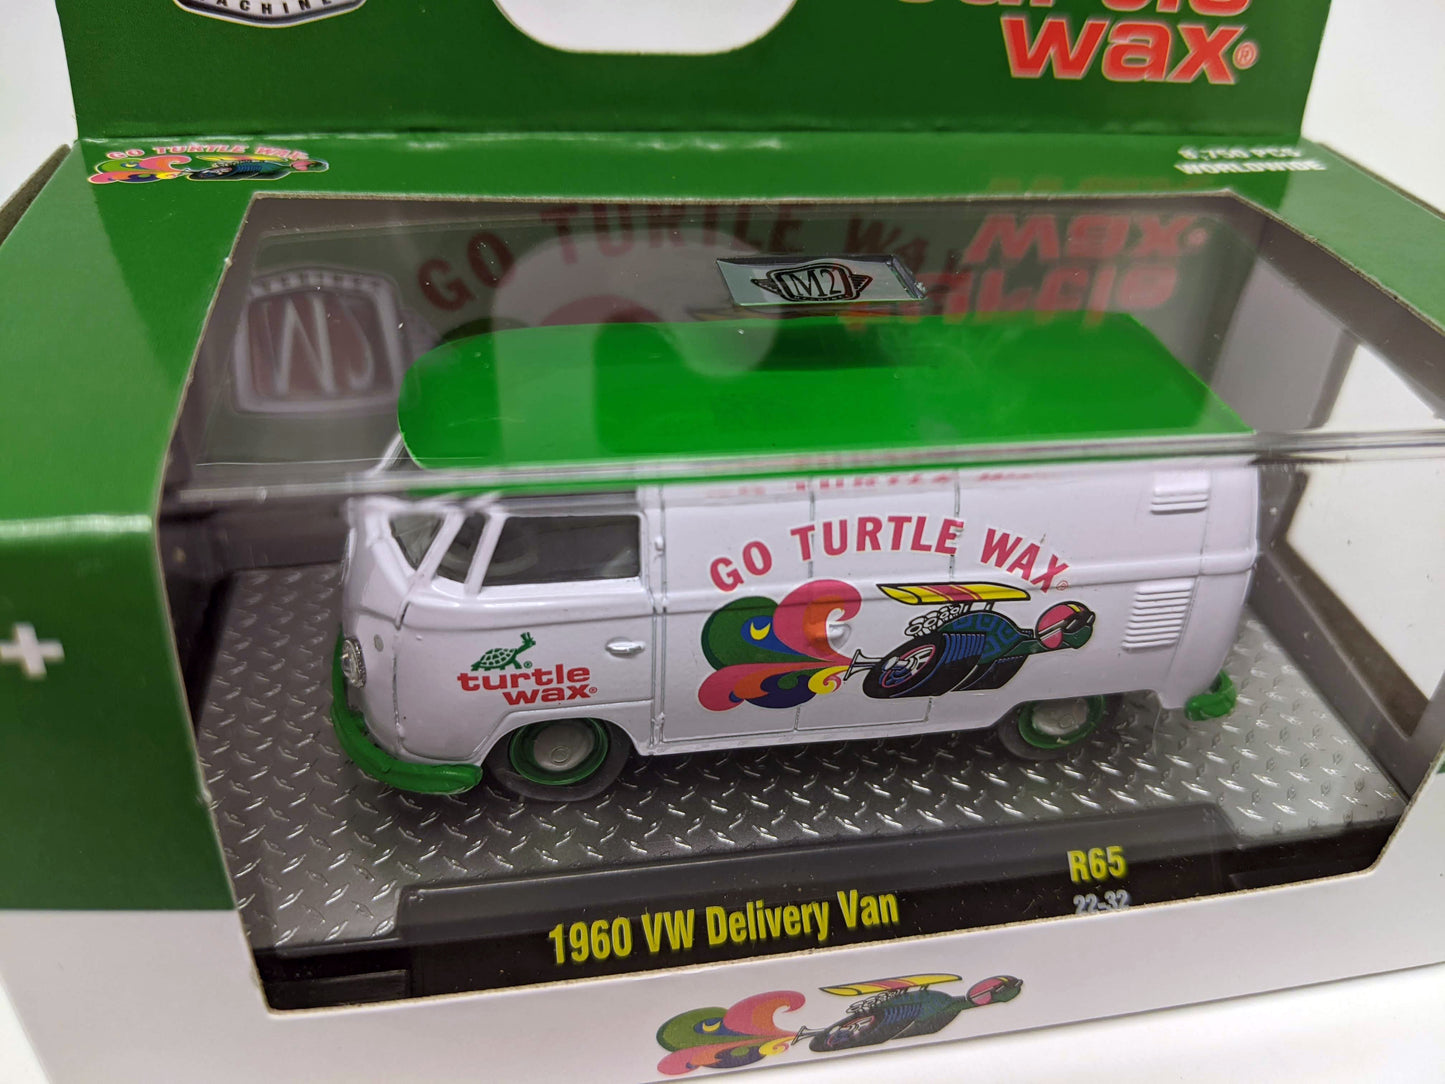 M2 1960 VW Delivery Van - Turtle Wax